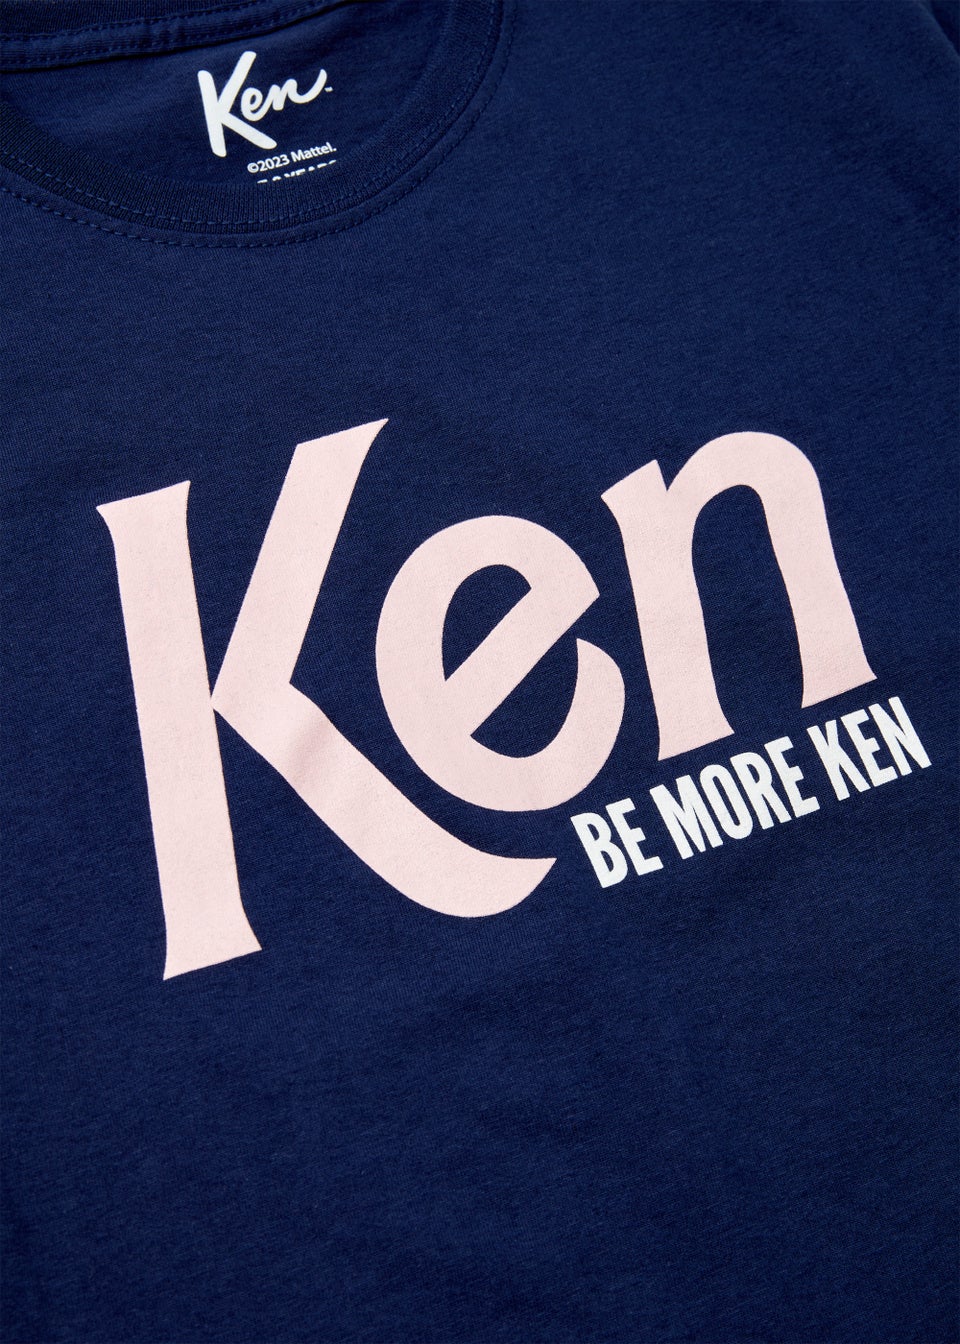 Kids Blue Be More Ken T-Shirt (3-15yrs)